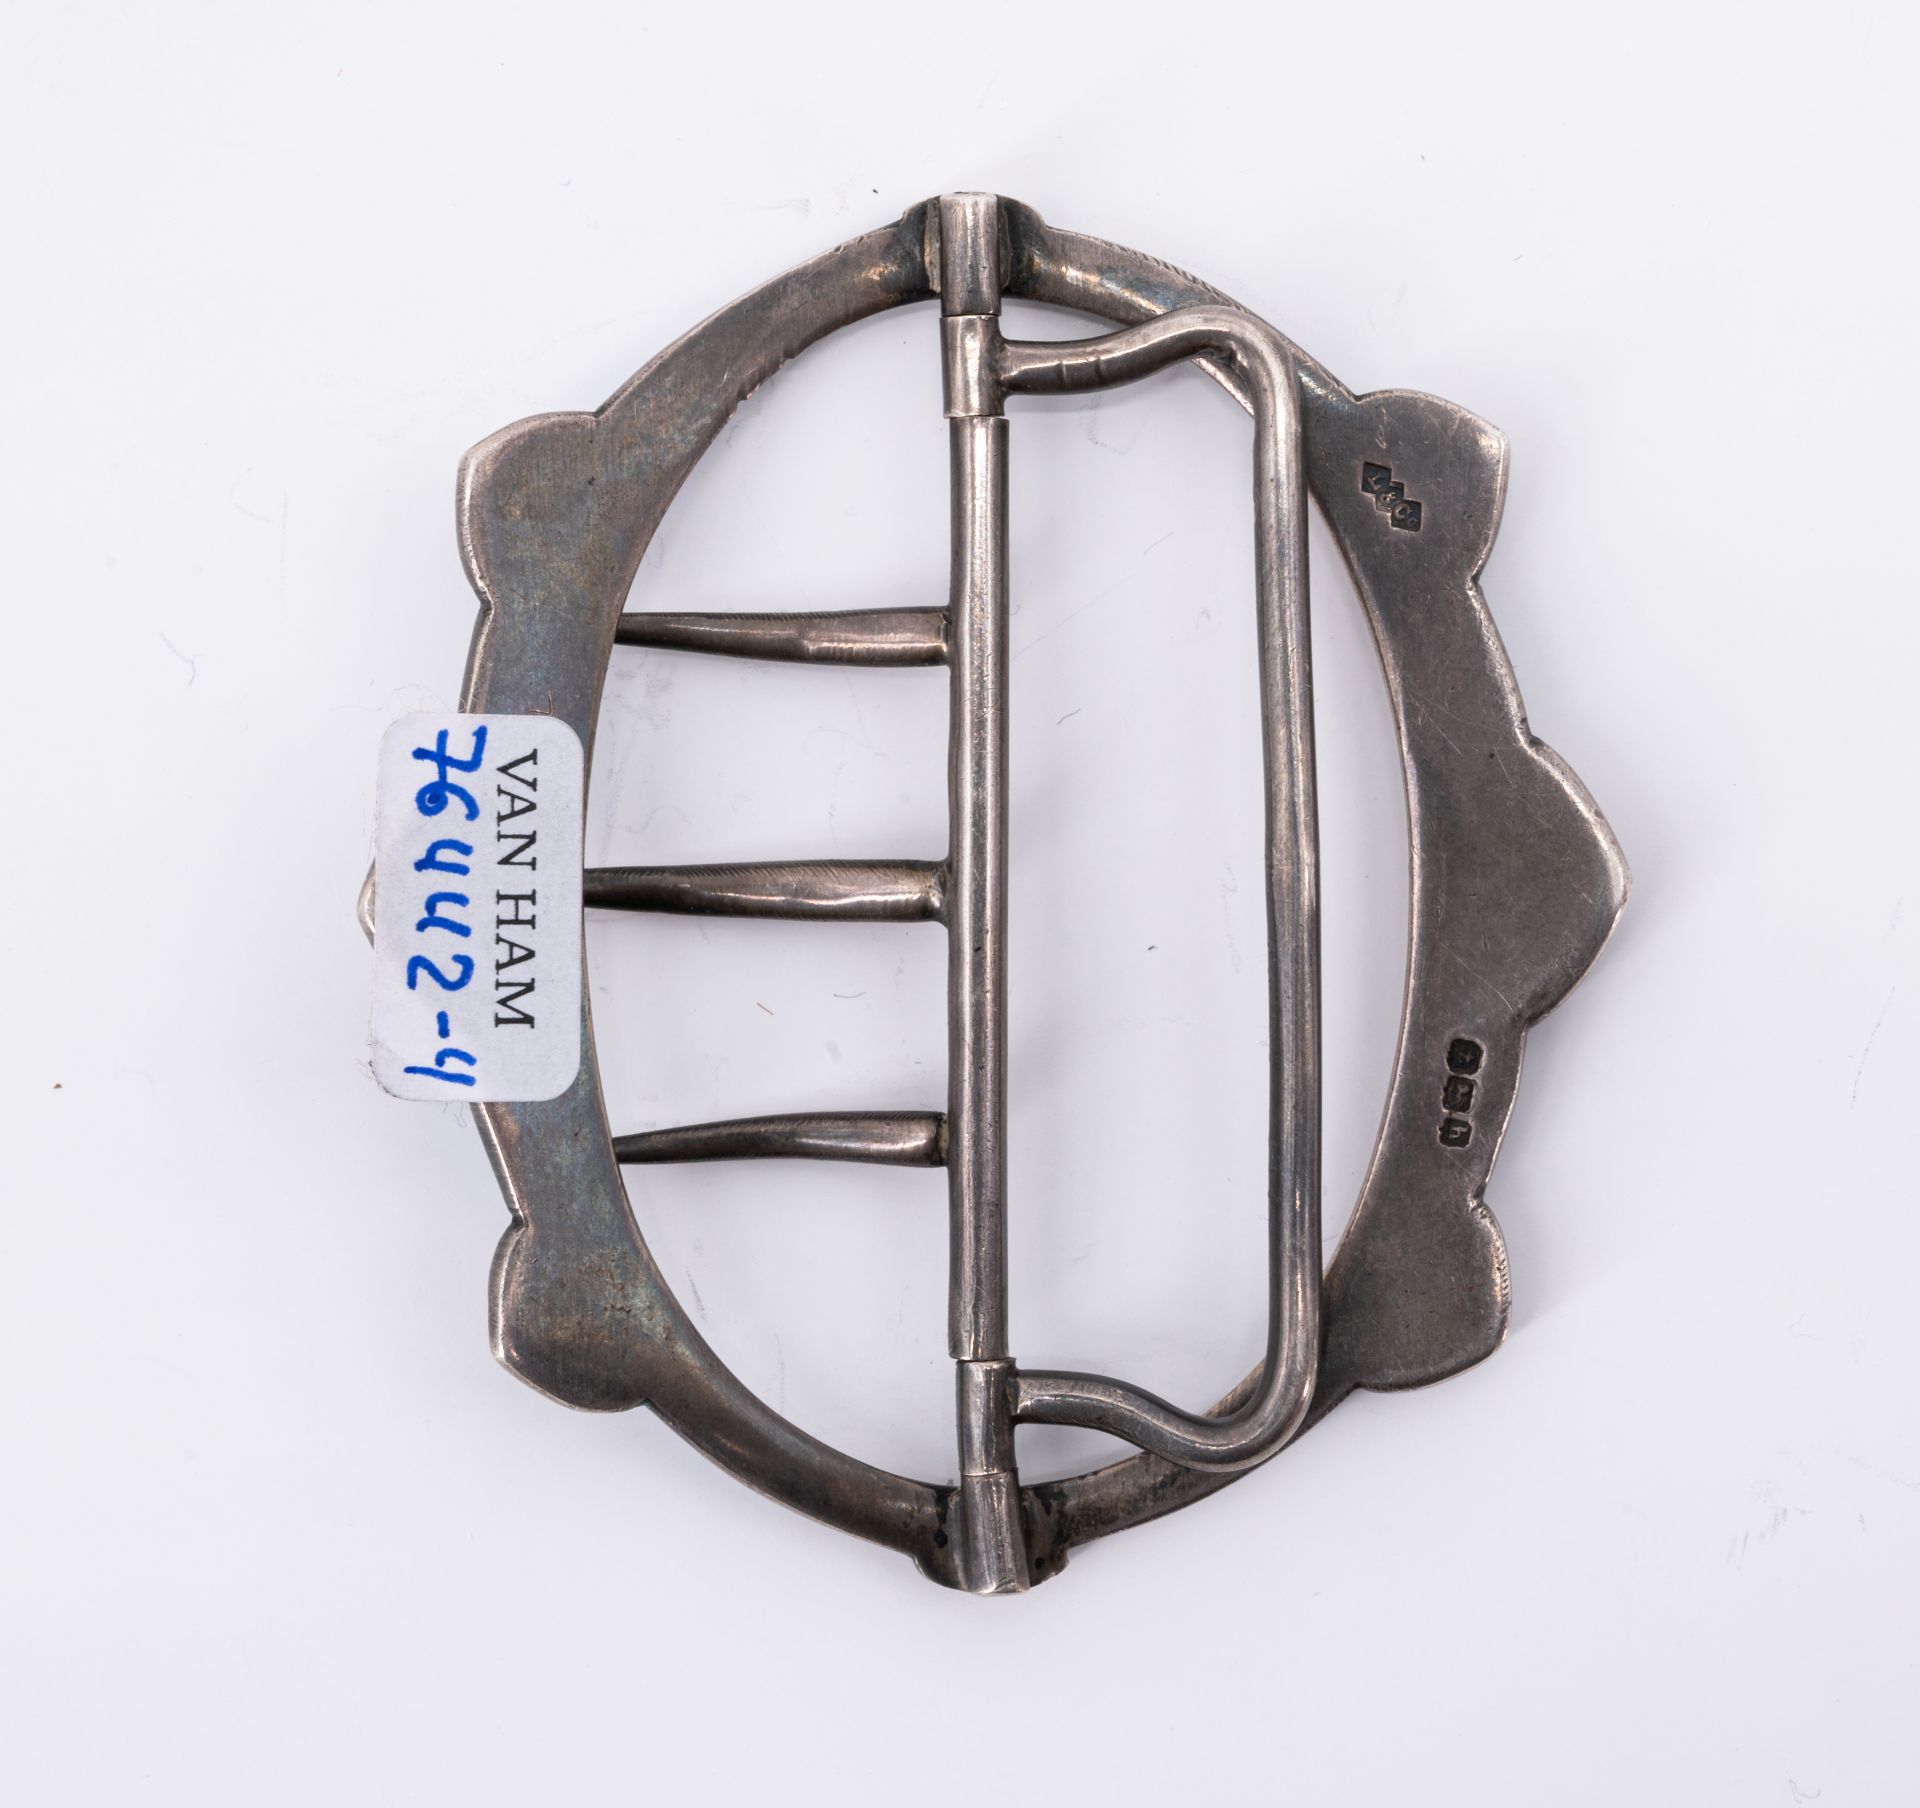 Oval belt buckle with enamel decor - Image 2 of 2